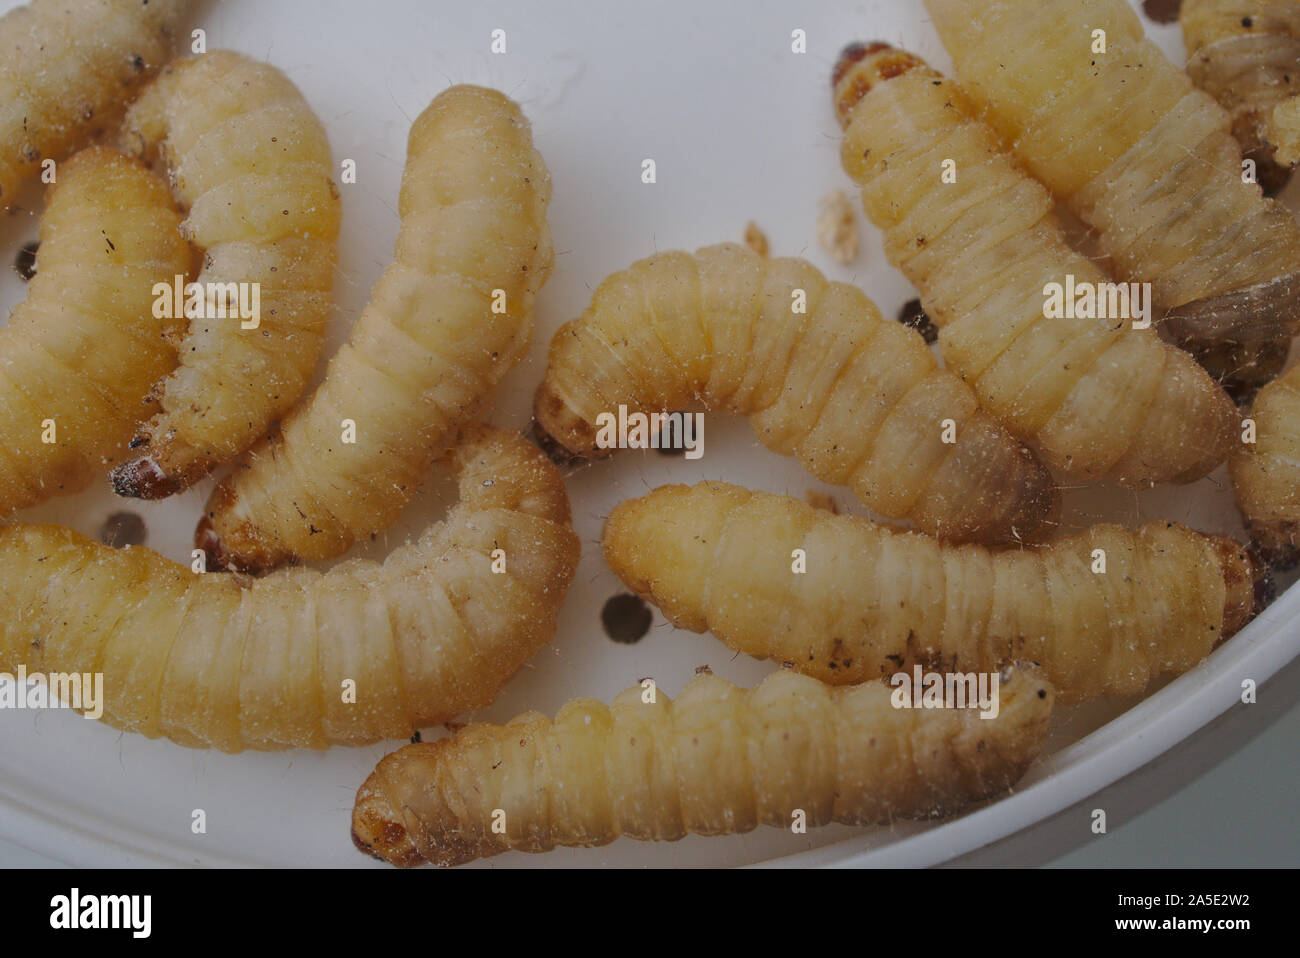 Several Waxworm, larvae of Wax Moth. Stock Photo